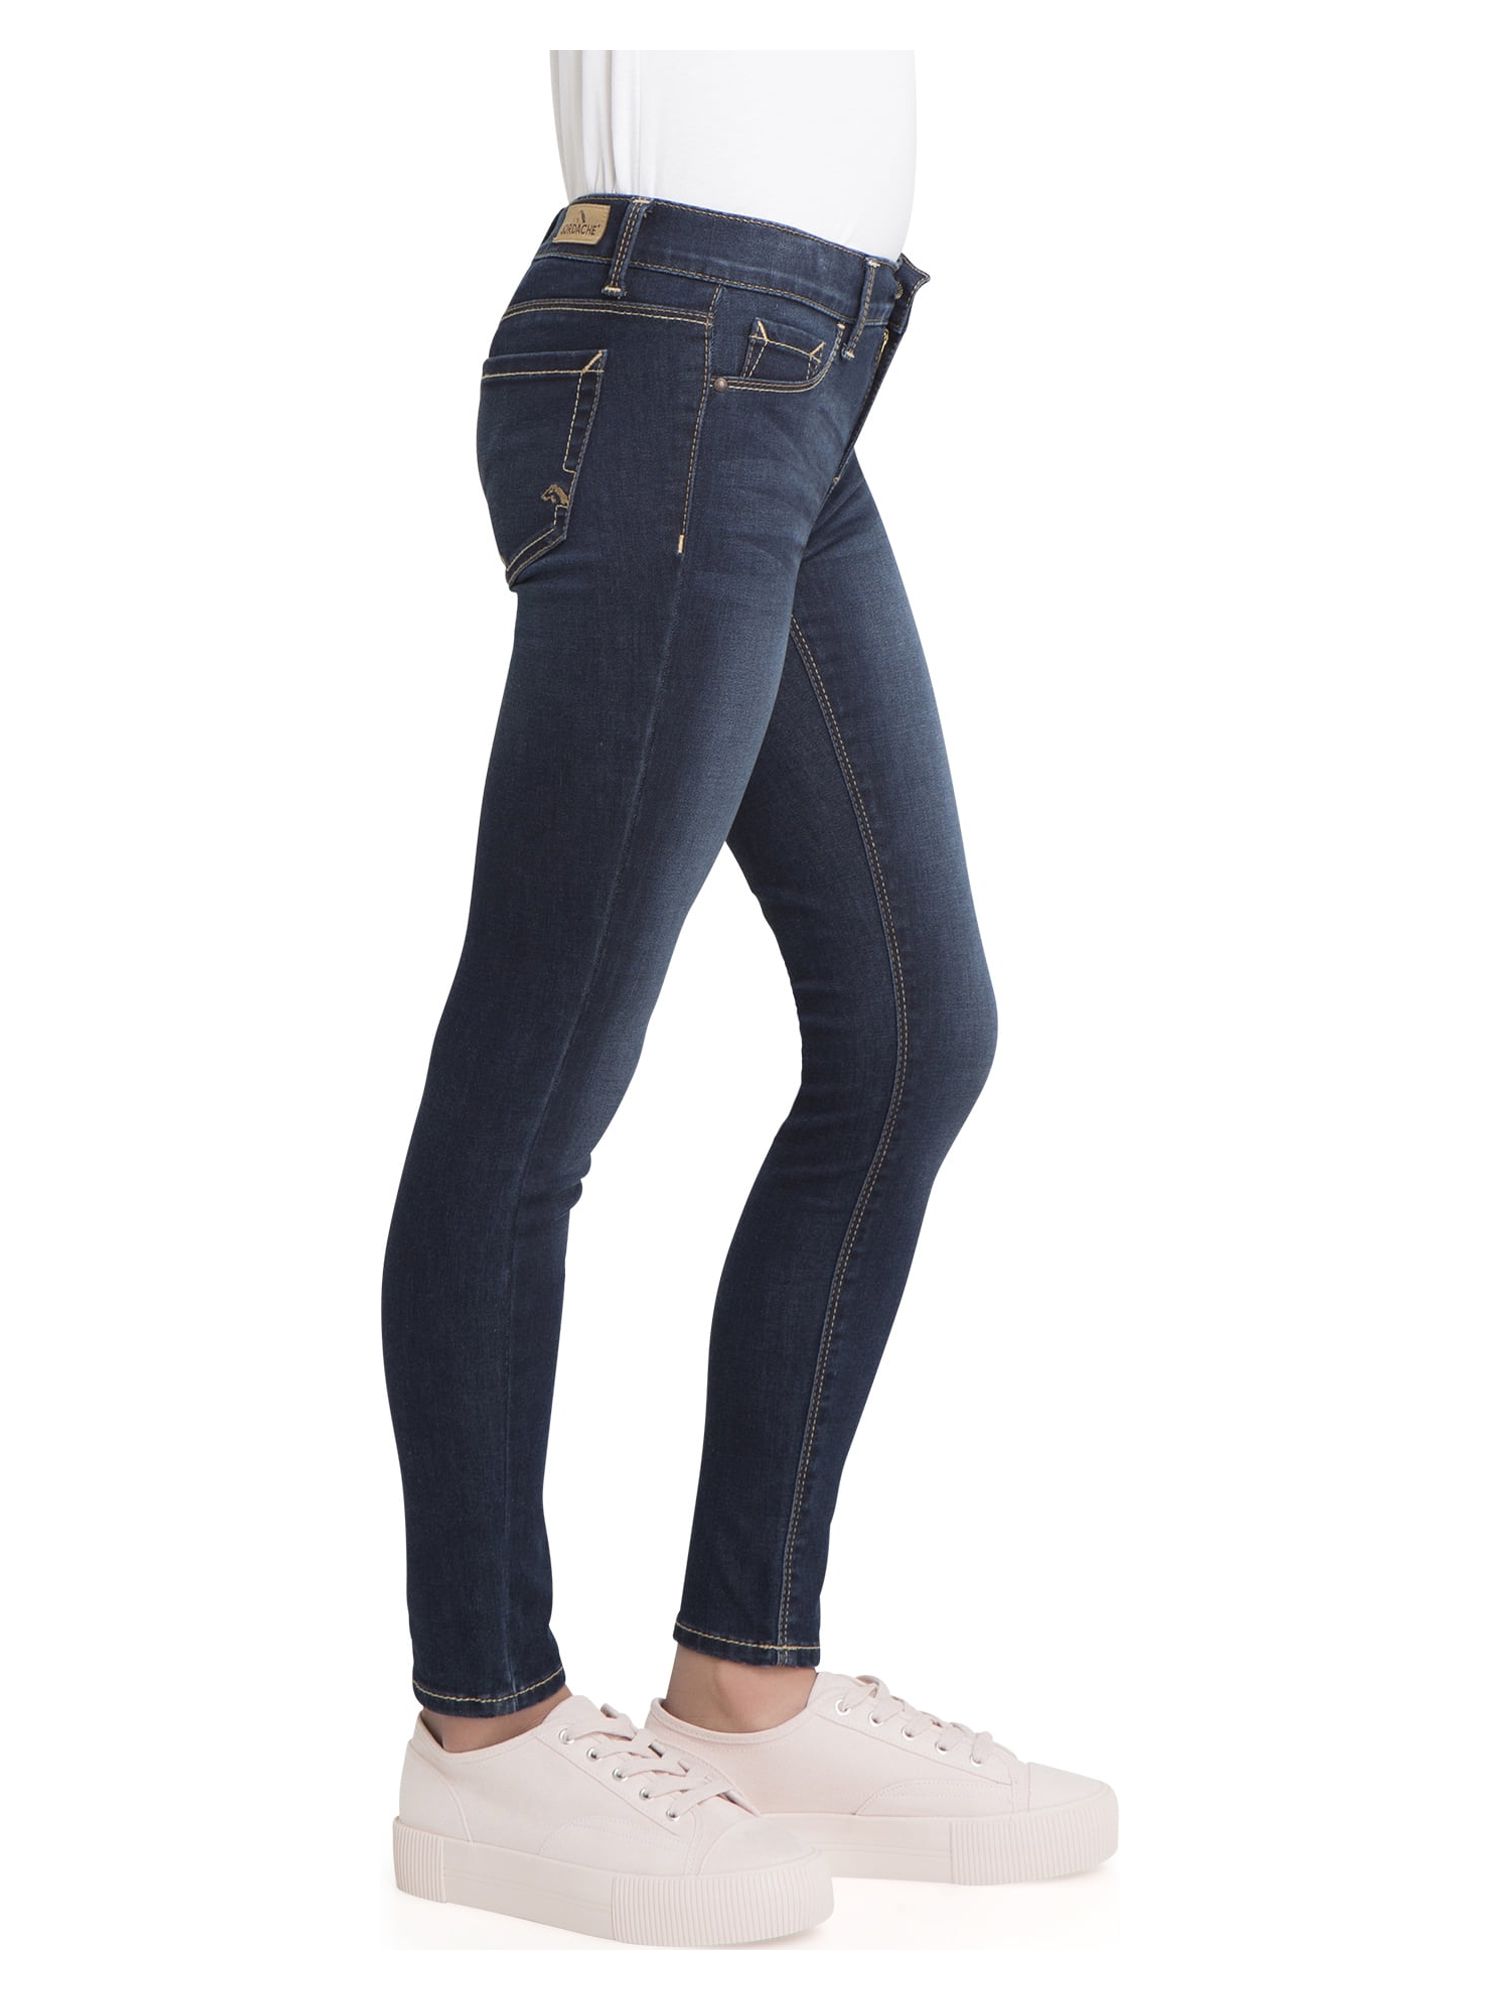 Jordache Girls Super Skinny Power Stretch Jeans, Sizes 5-18 - image 2 of 3